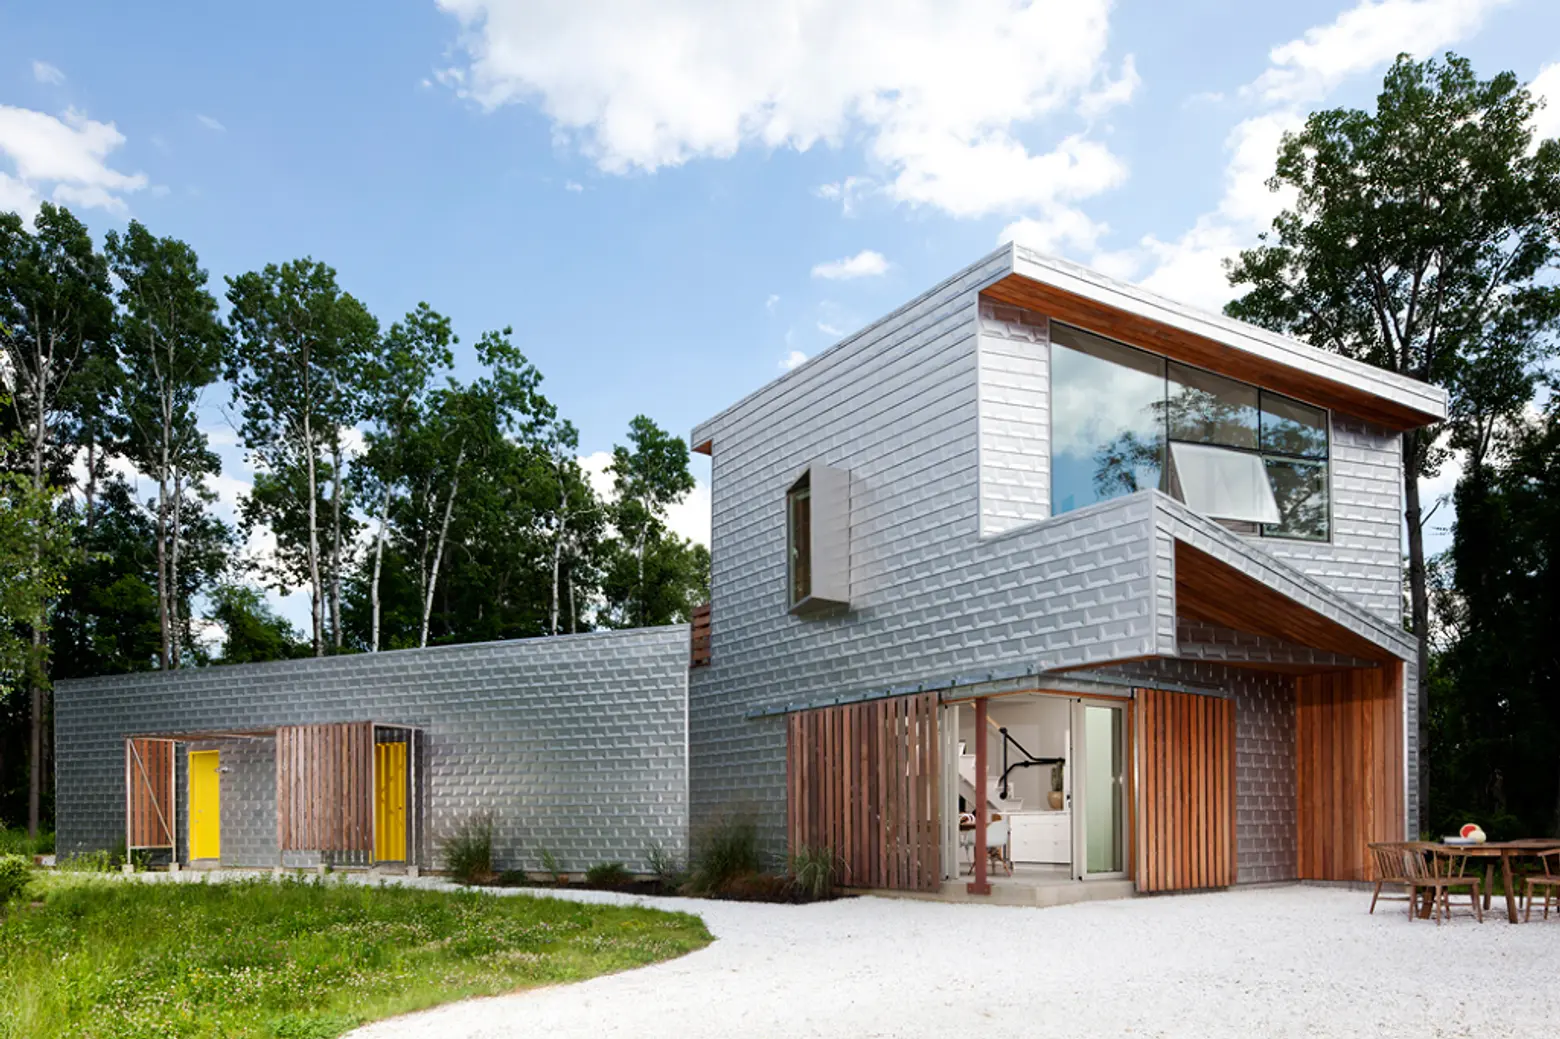 Grzywinski + Pons’ Dutchess House No. 1 is an Aluminum-Clad Country Retreat